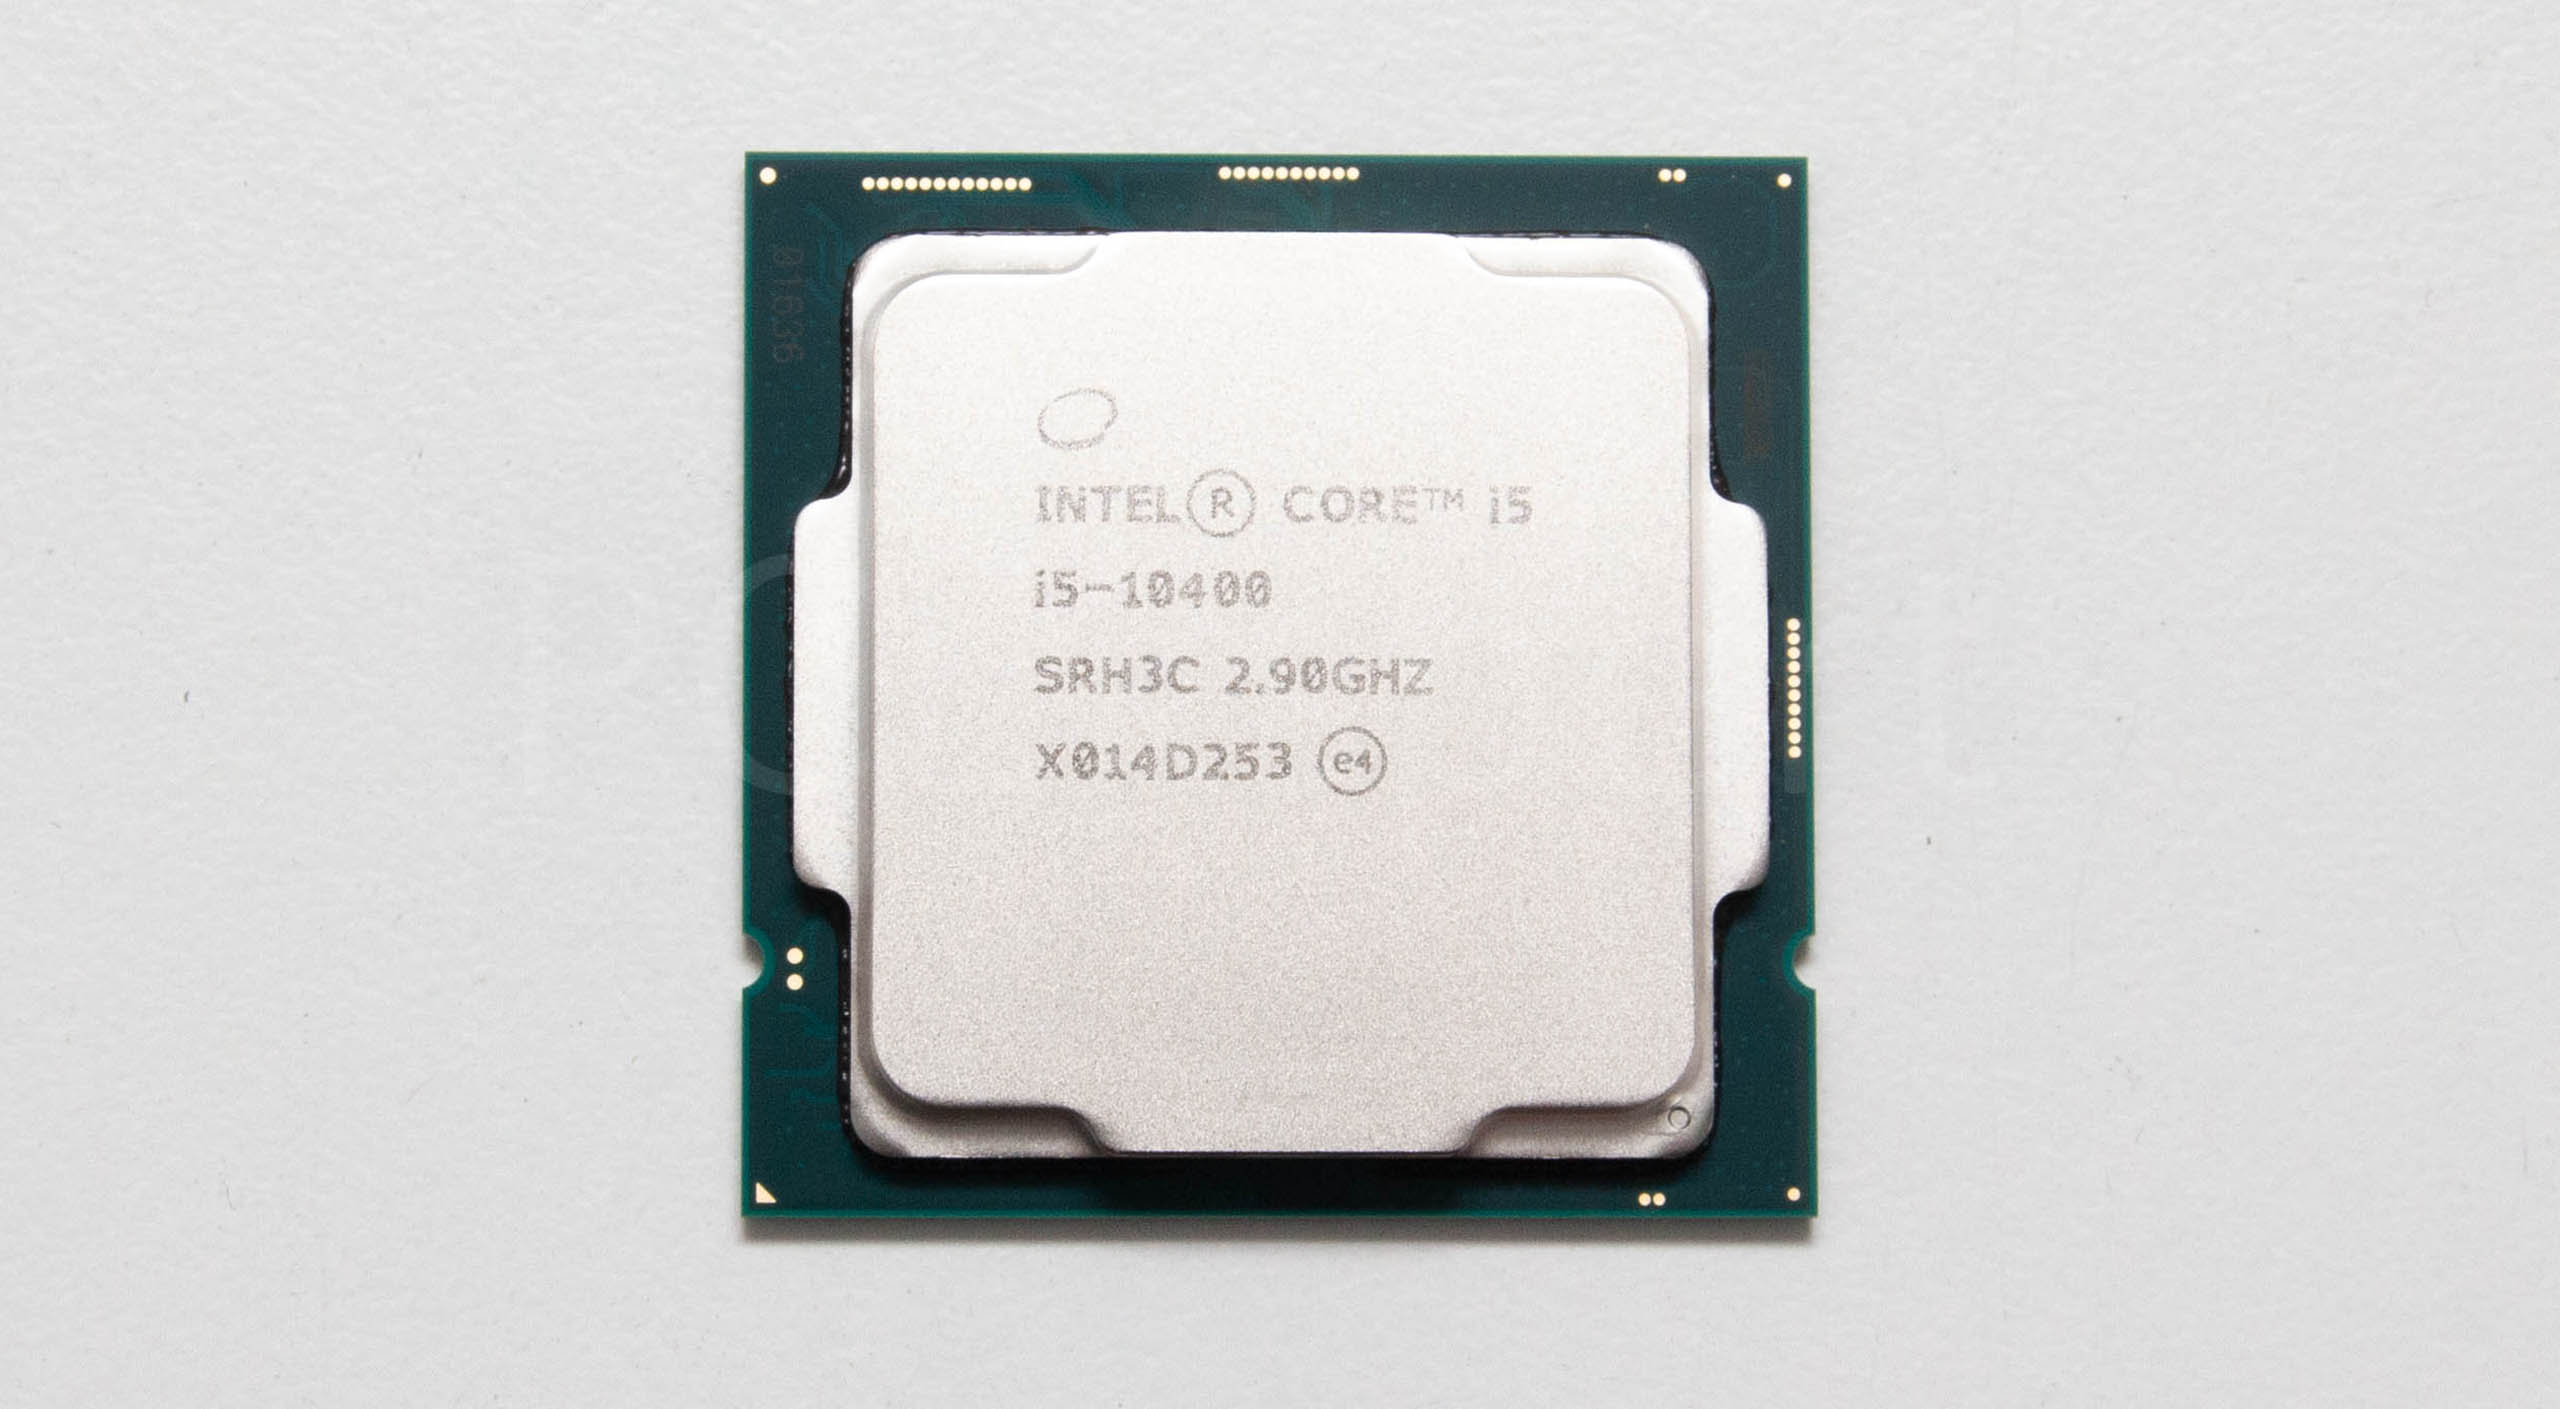 Intel r core tm купить. Процессор Intel Core i5-11400f OEM. Процессор Intel Core i5-10400. Intel Core i5-11400f Tray (2600mhz/lga1200/l3 12288kb) OEM. Intel Core i5-12600kf.